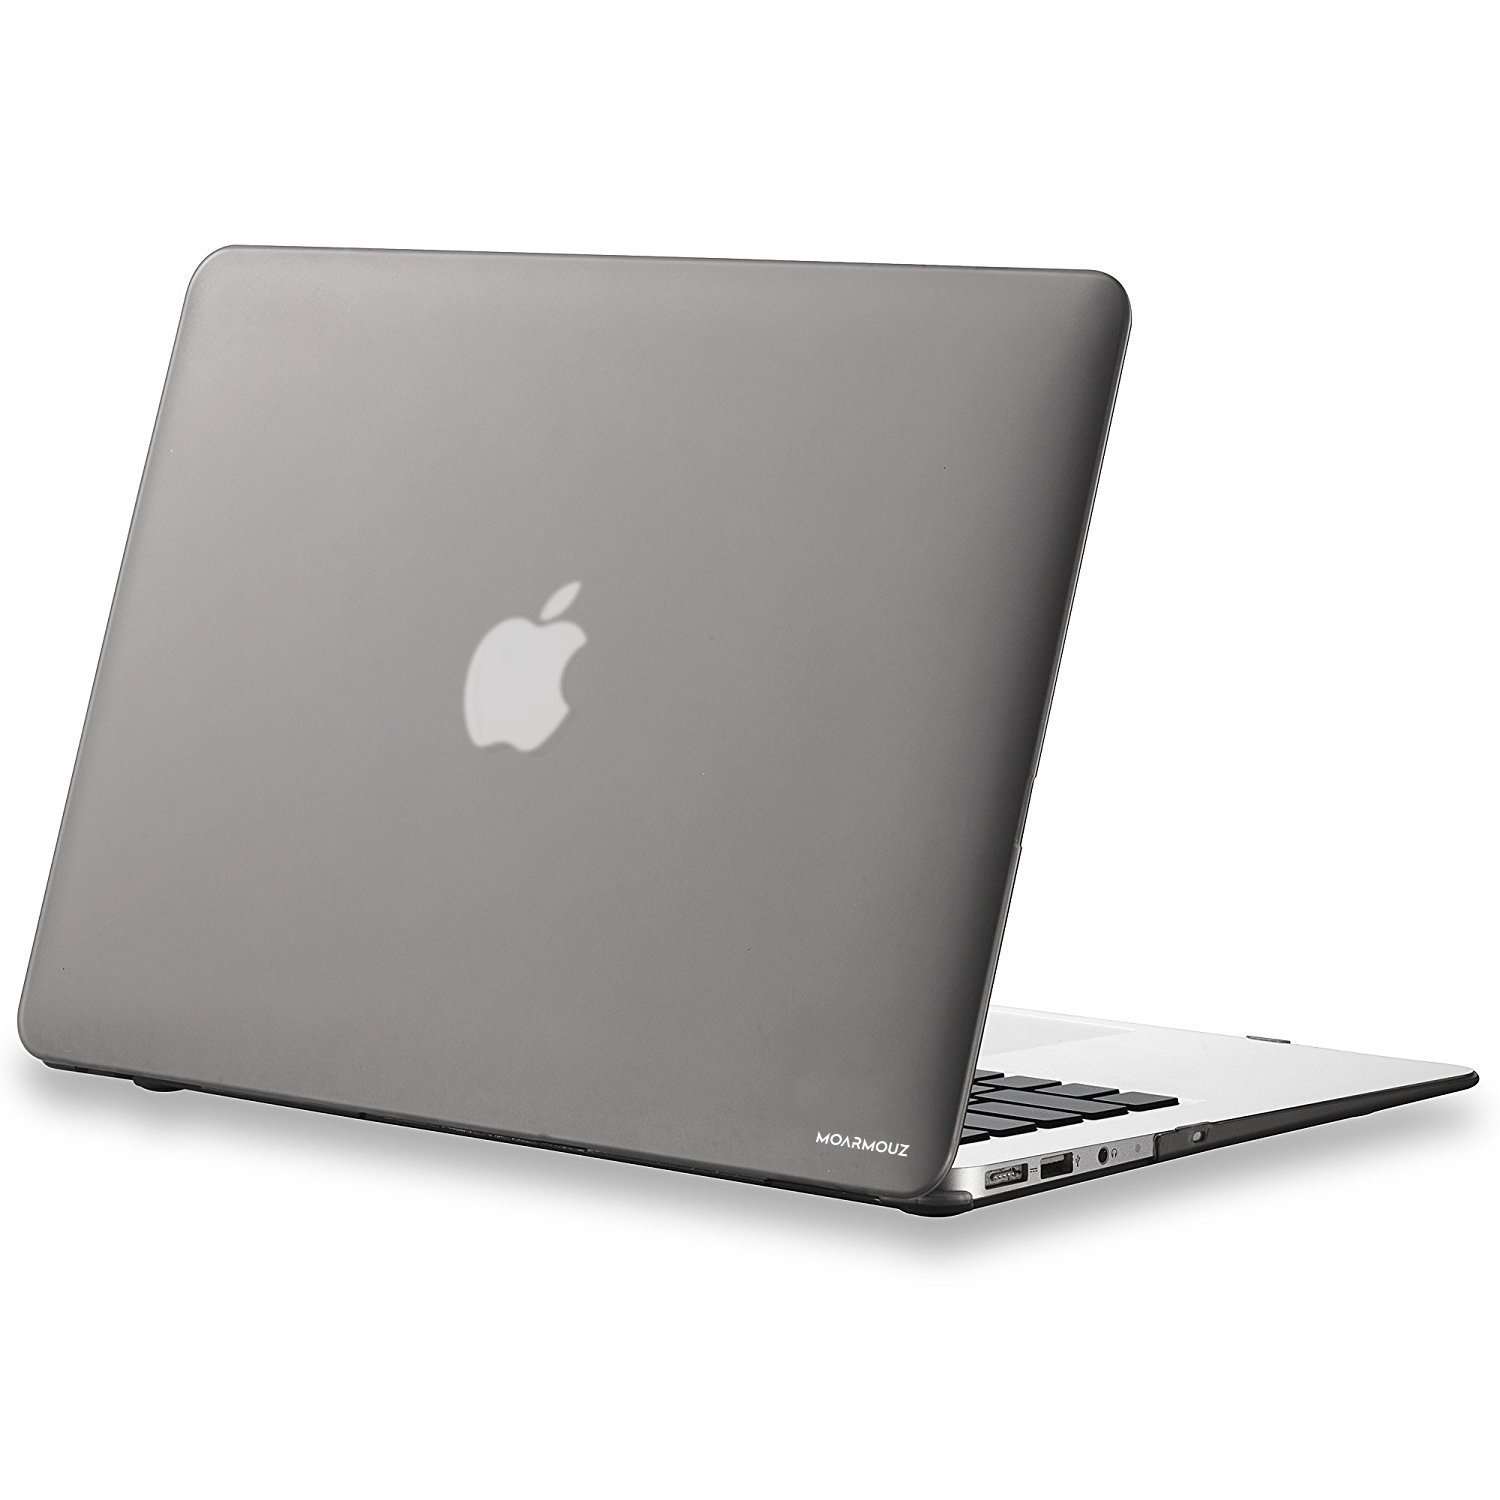 MoArmouz - Hardshell Case For MacBook Air 13" (2010-2017)